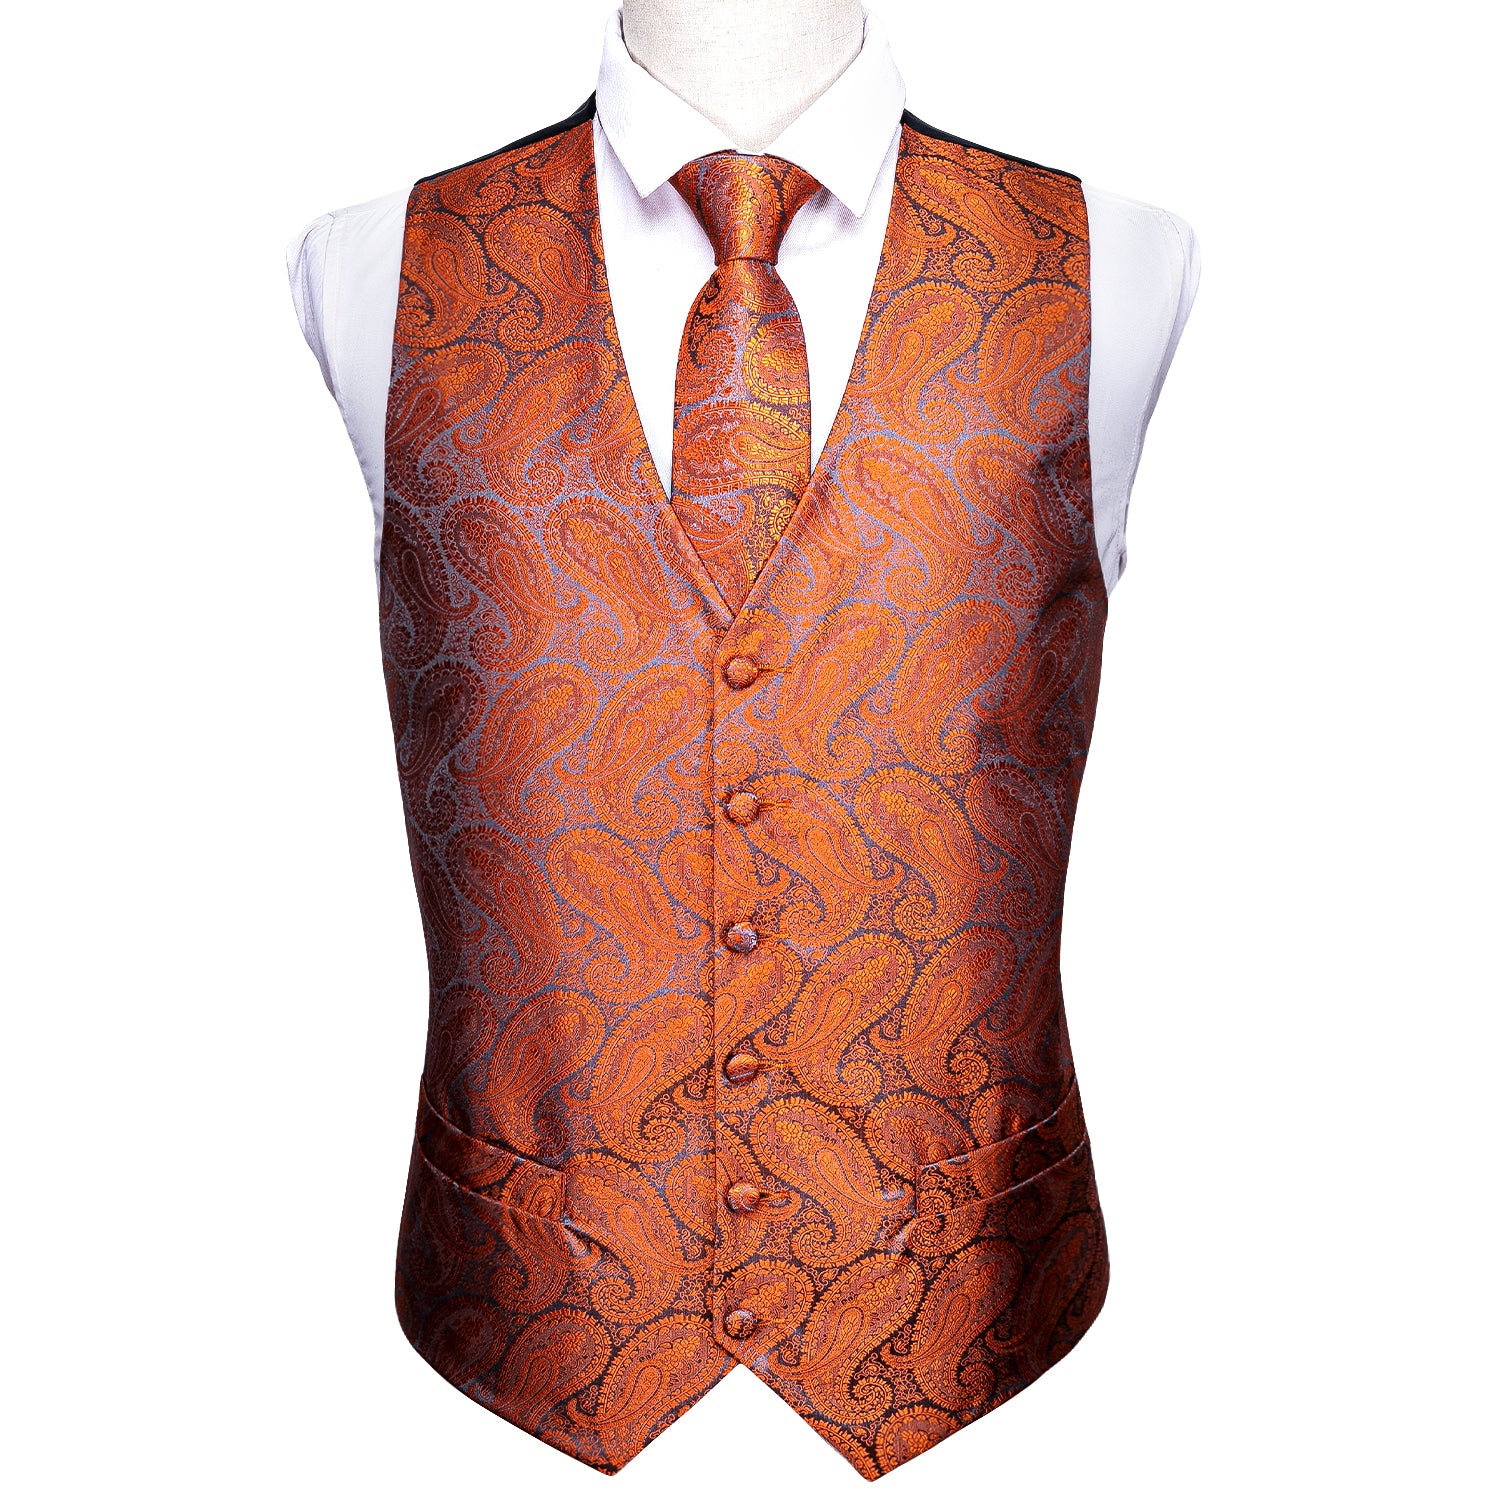 Barry.wang Men's Vest Orange Paisley Silk Tuxedo Vest Necktie Pocket Square Cufflinks Set